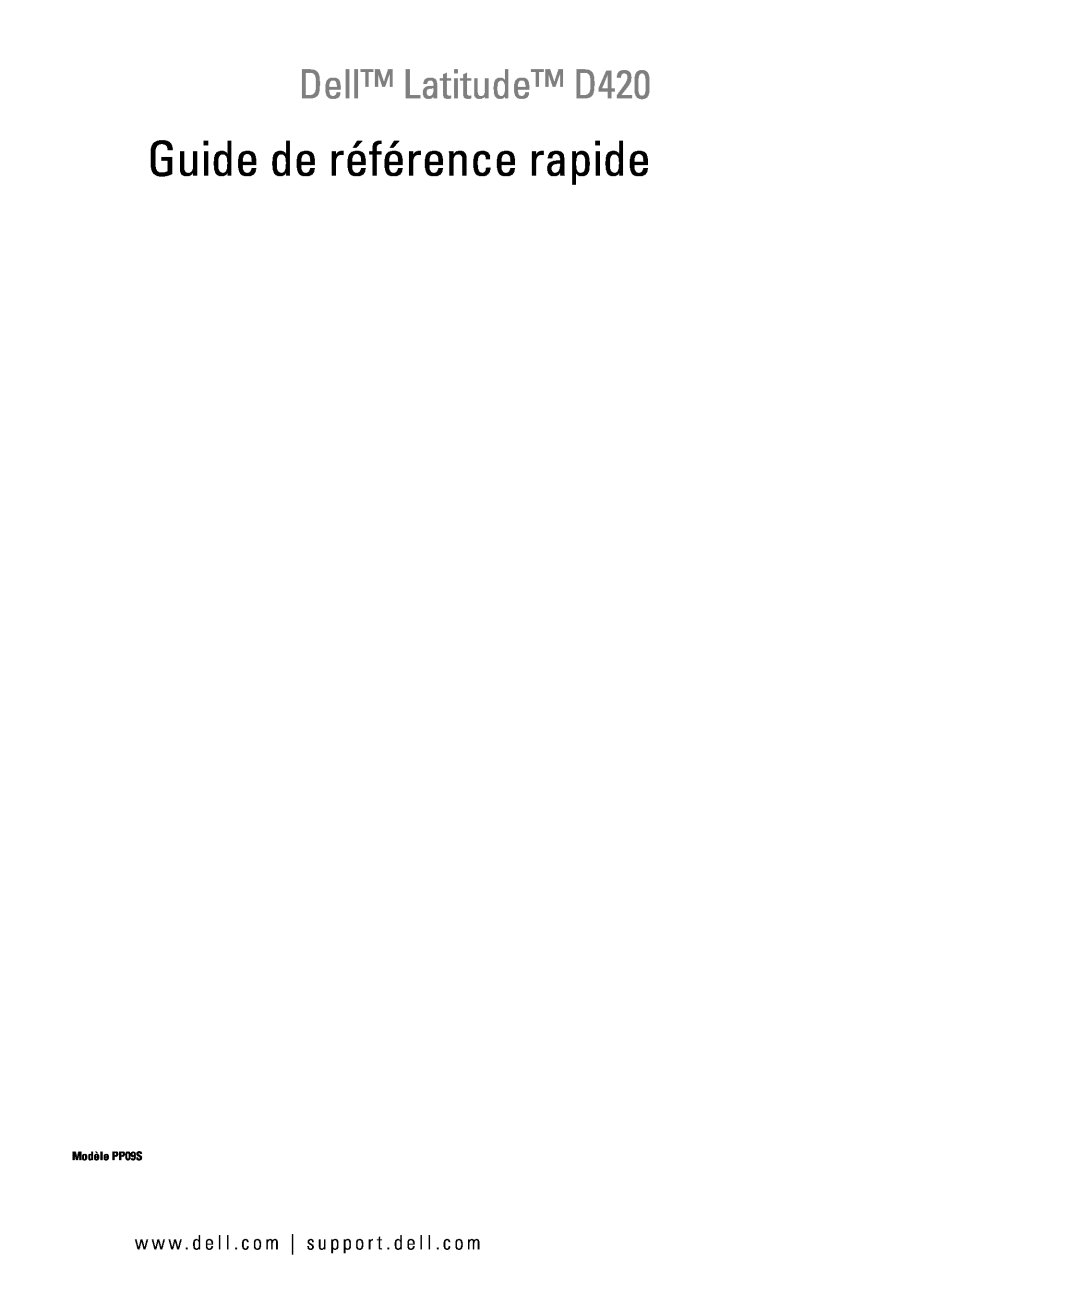 Dell manual Guide de référence rapide, Dell Latitude D420, w w w . d e l l . c o m s u p p o r t . d e l l . c o m 